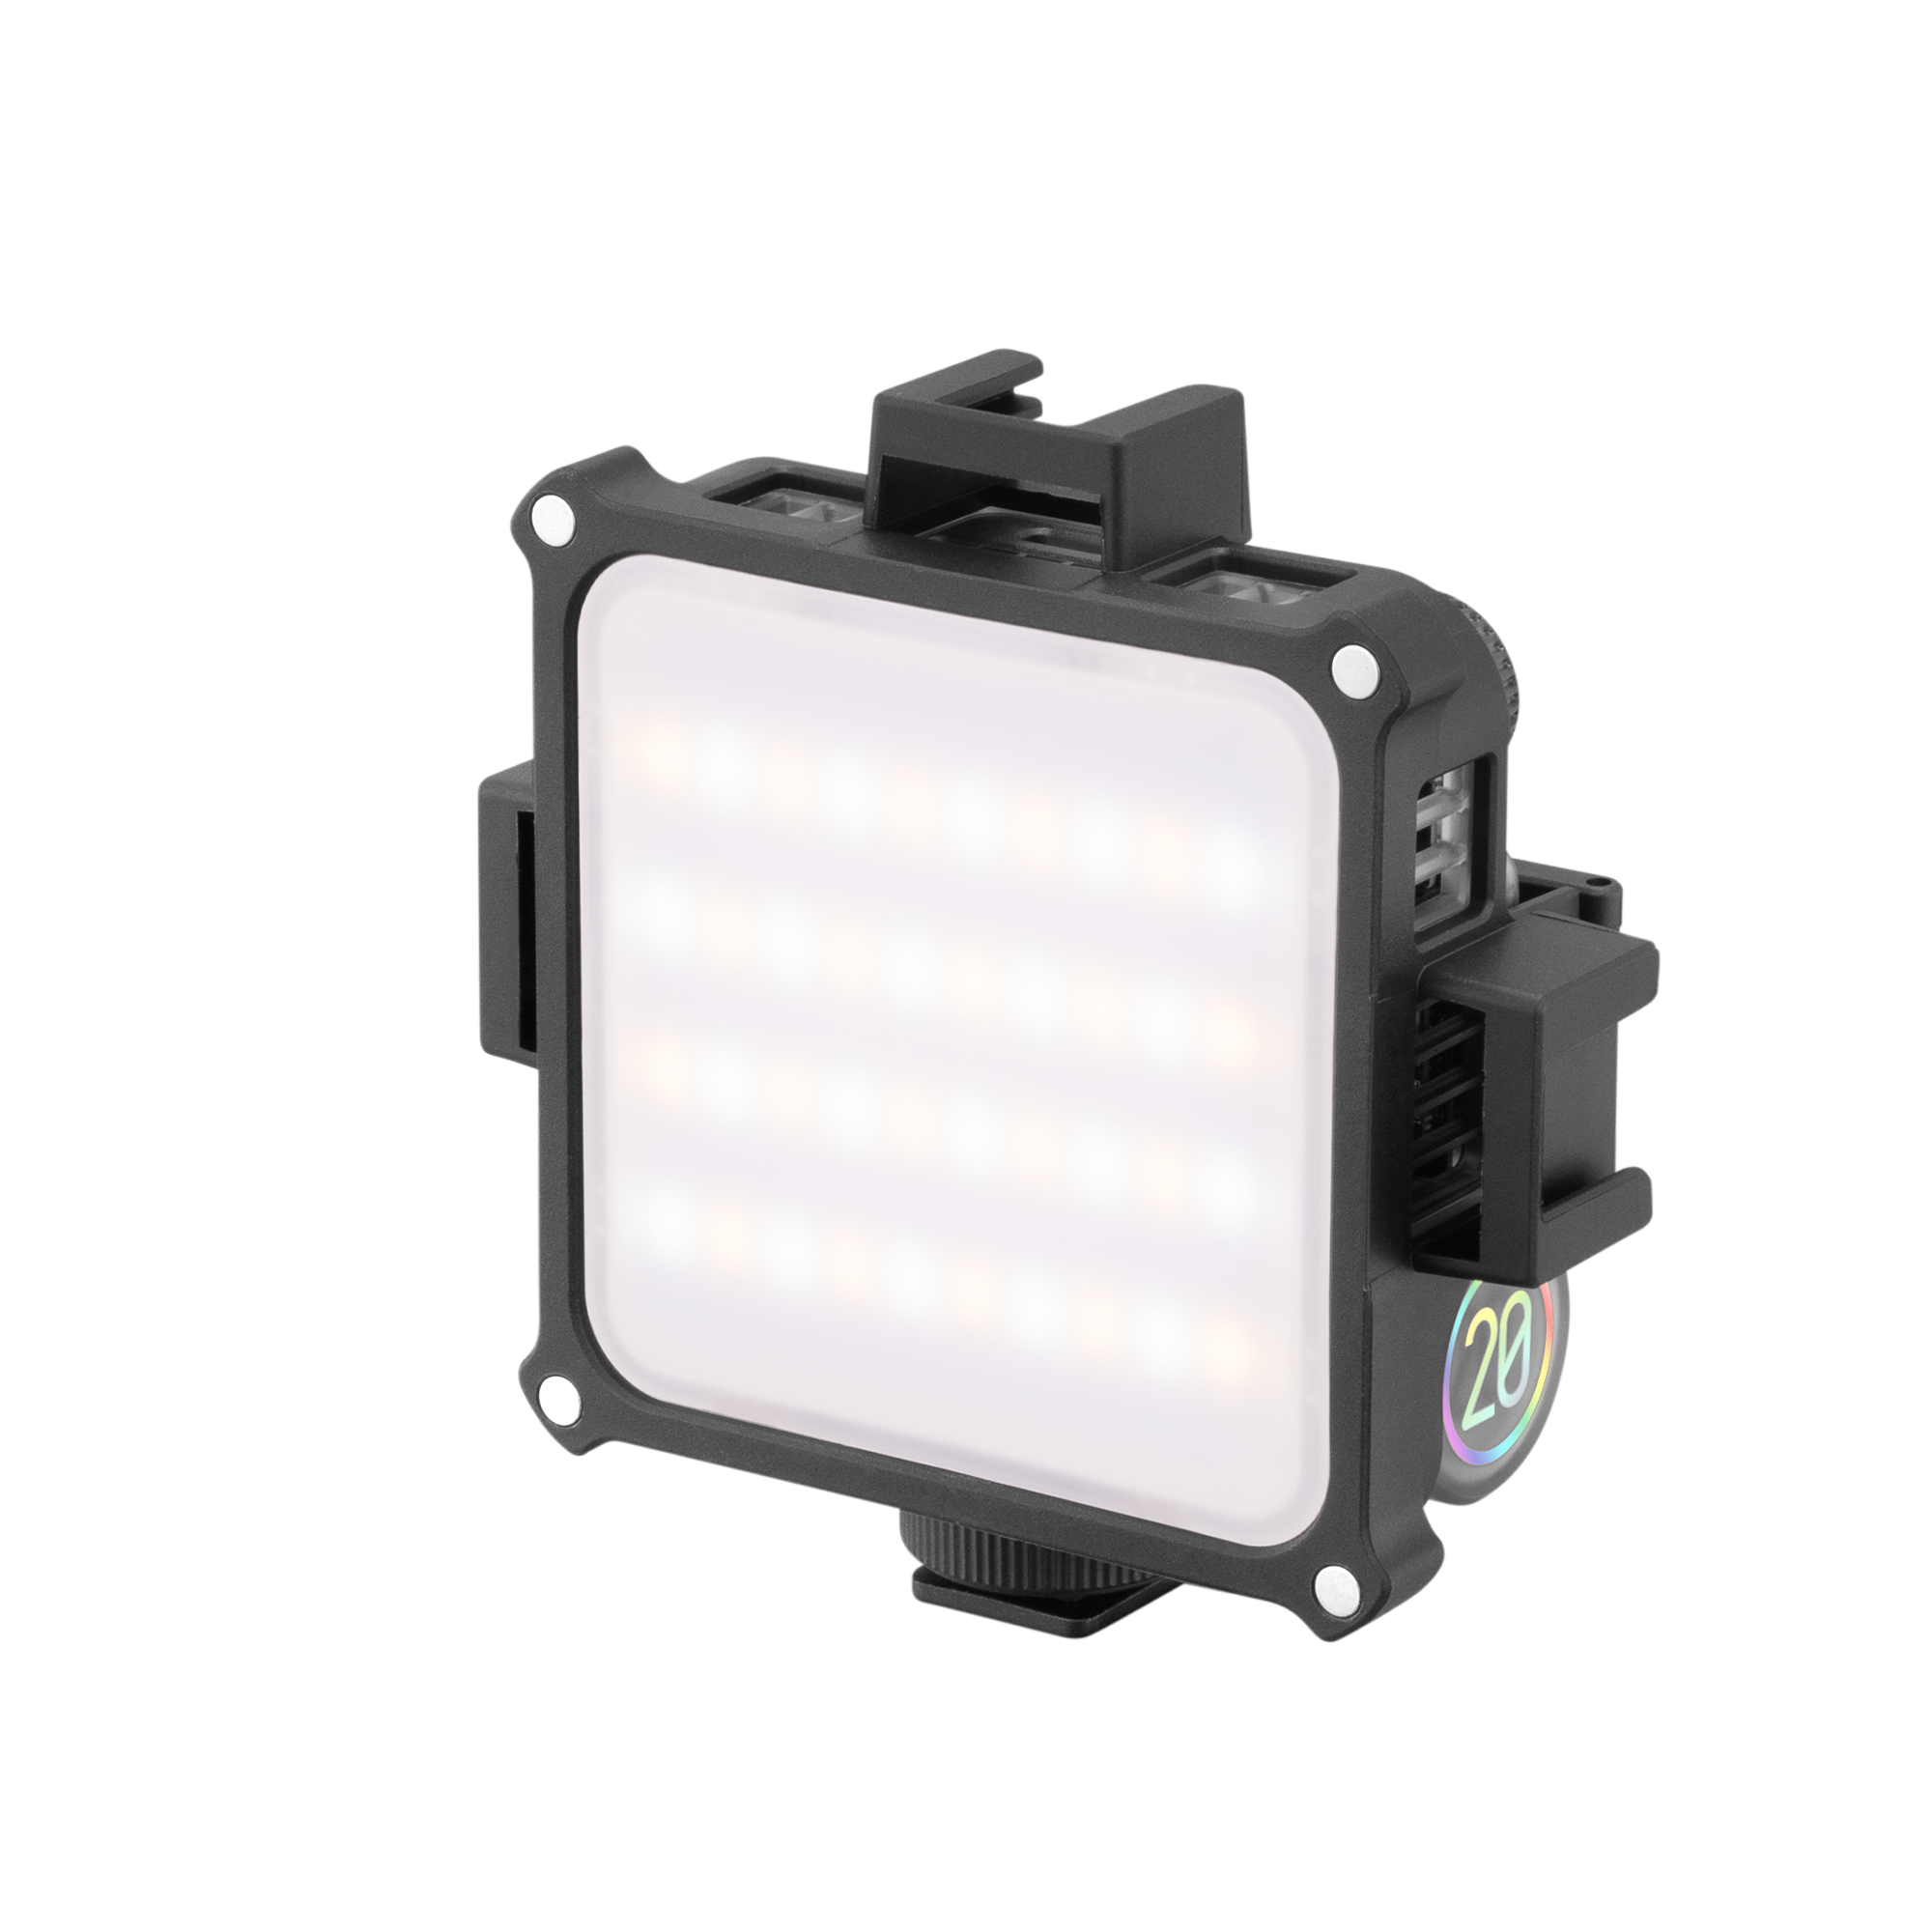 Zhiyun Fiveray M20C reviewed: an interesting new small light option